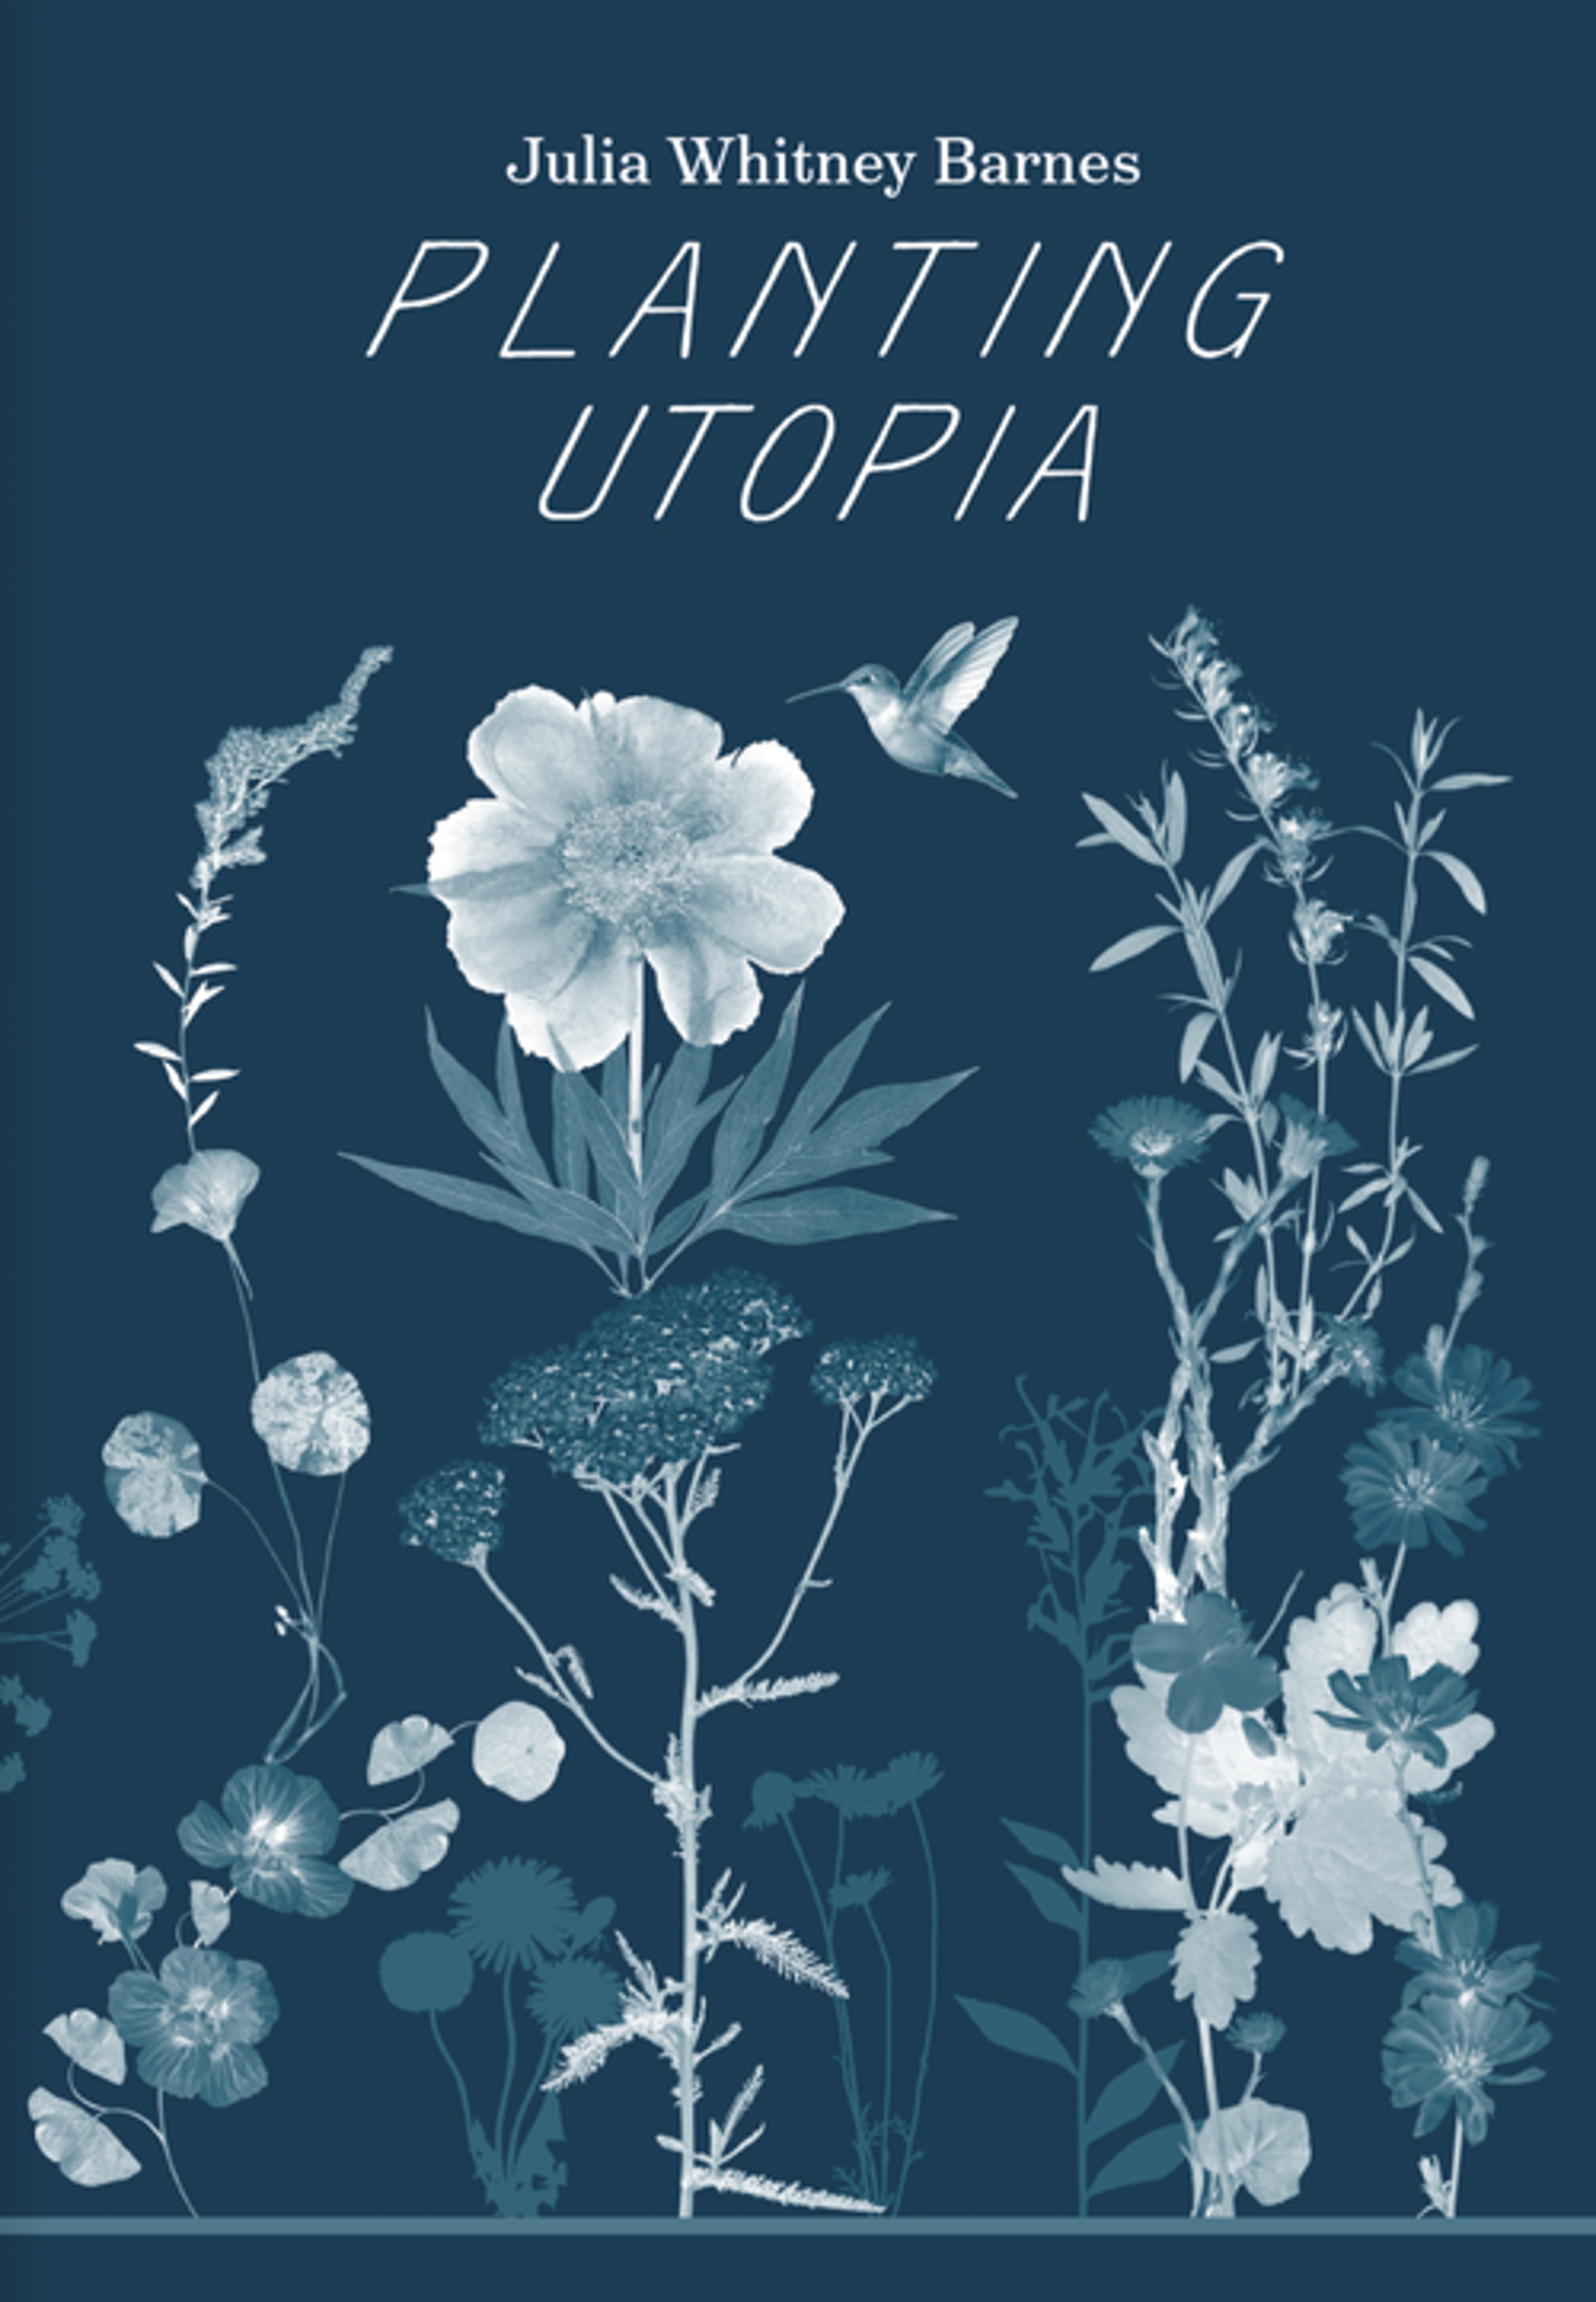 Planting Utopia by Julia Whitney Barnes